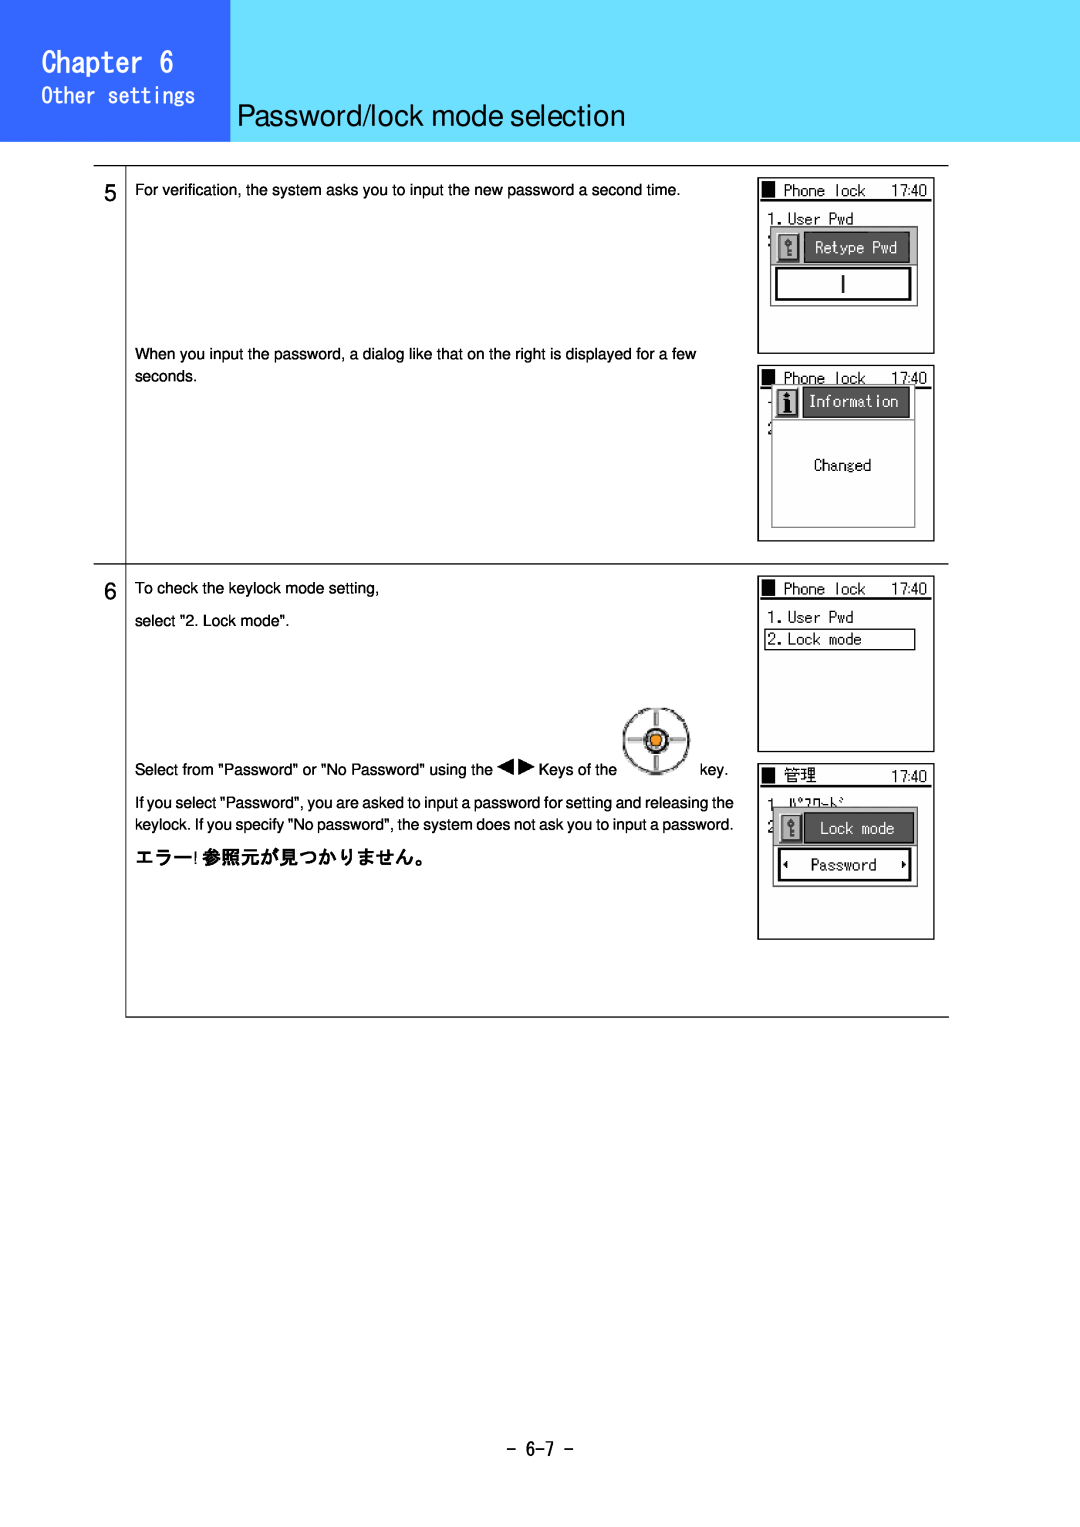 Hitachi 5000 user manual Password/lock mode selection, Chapter, Other settings, エラー! 参照元が見つかりません。 